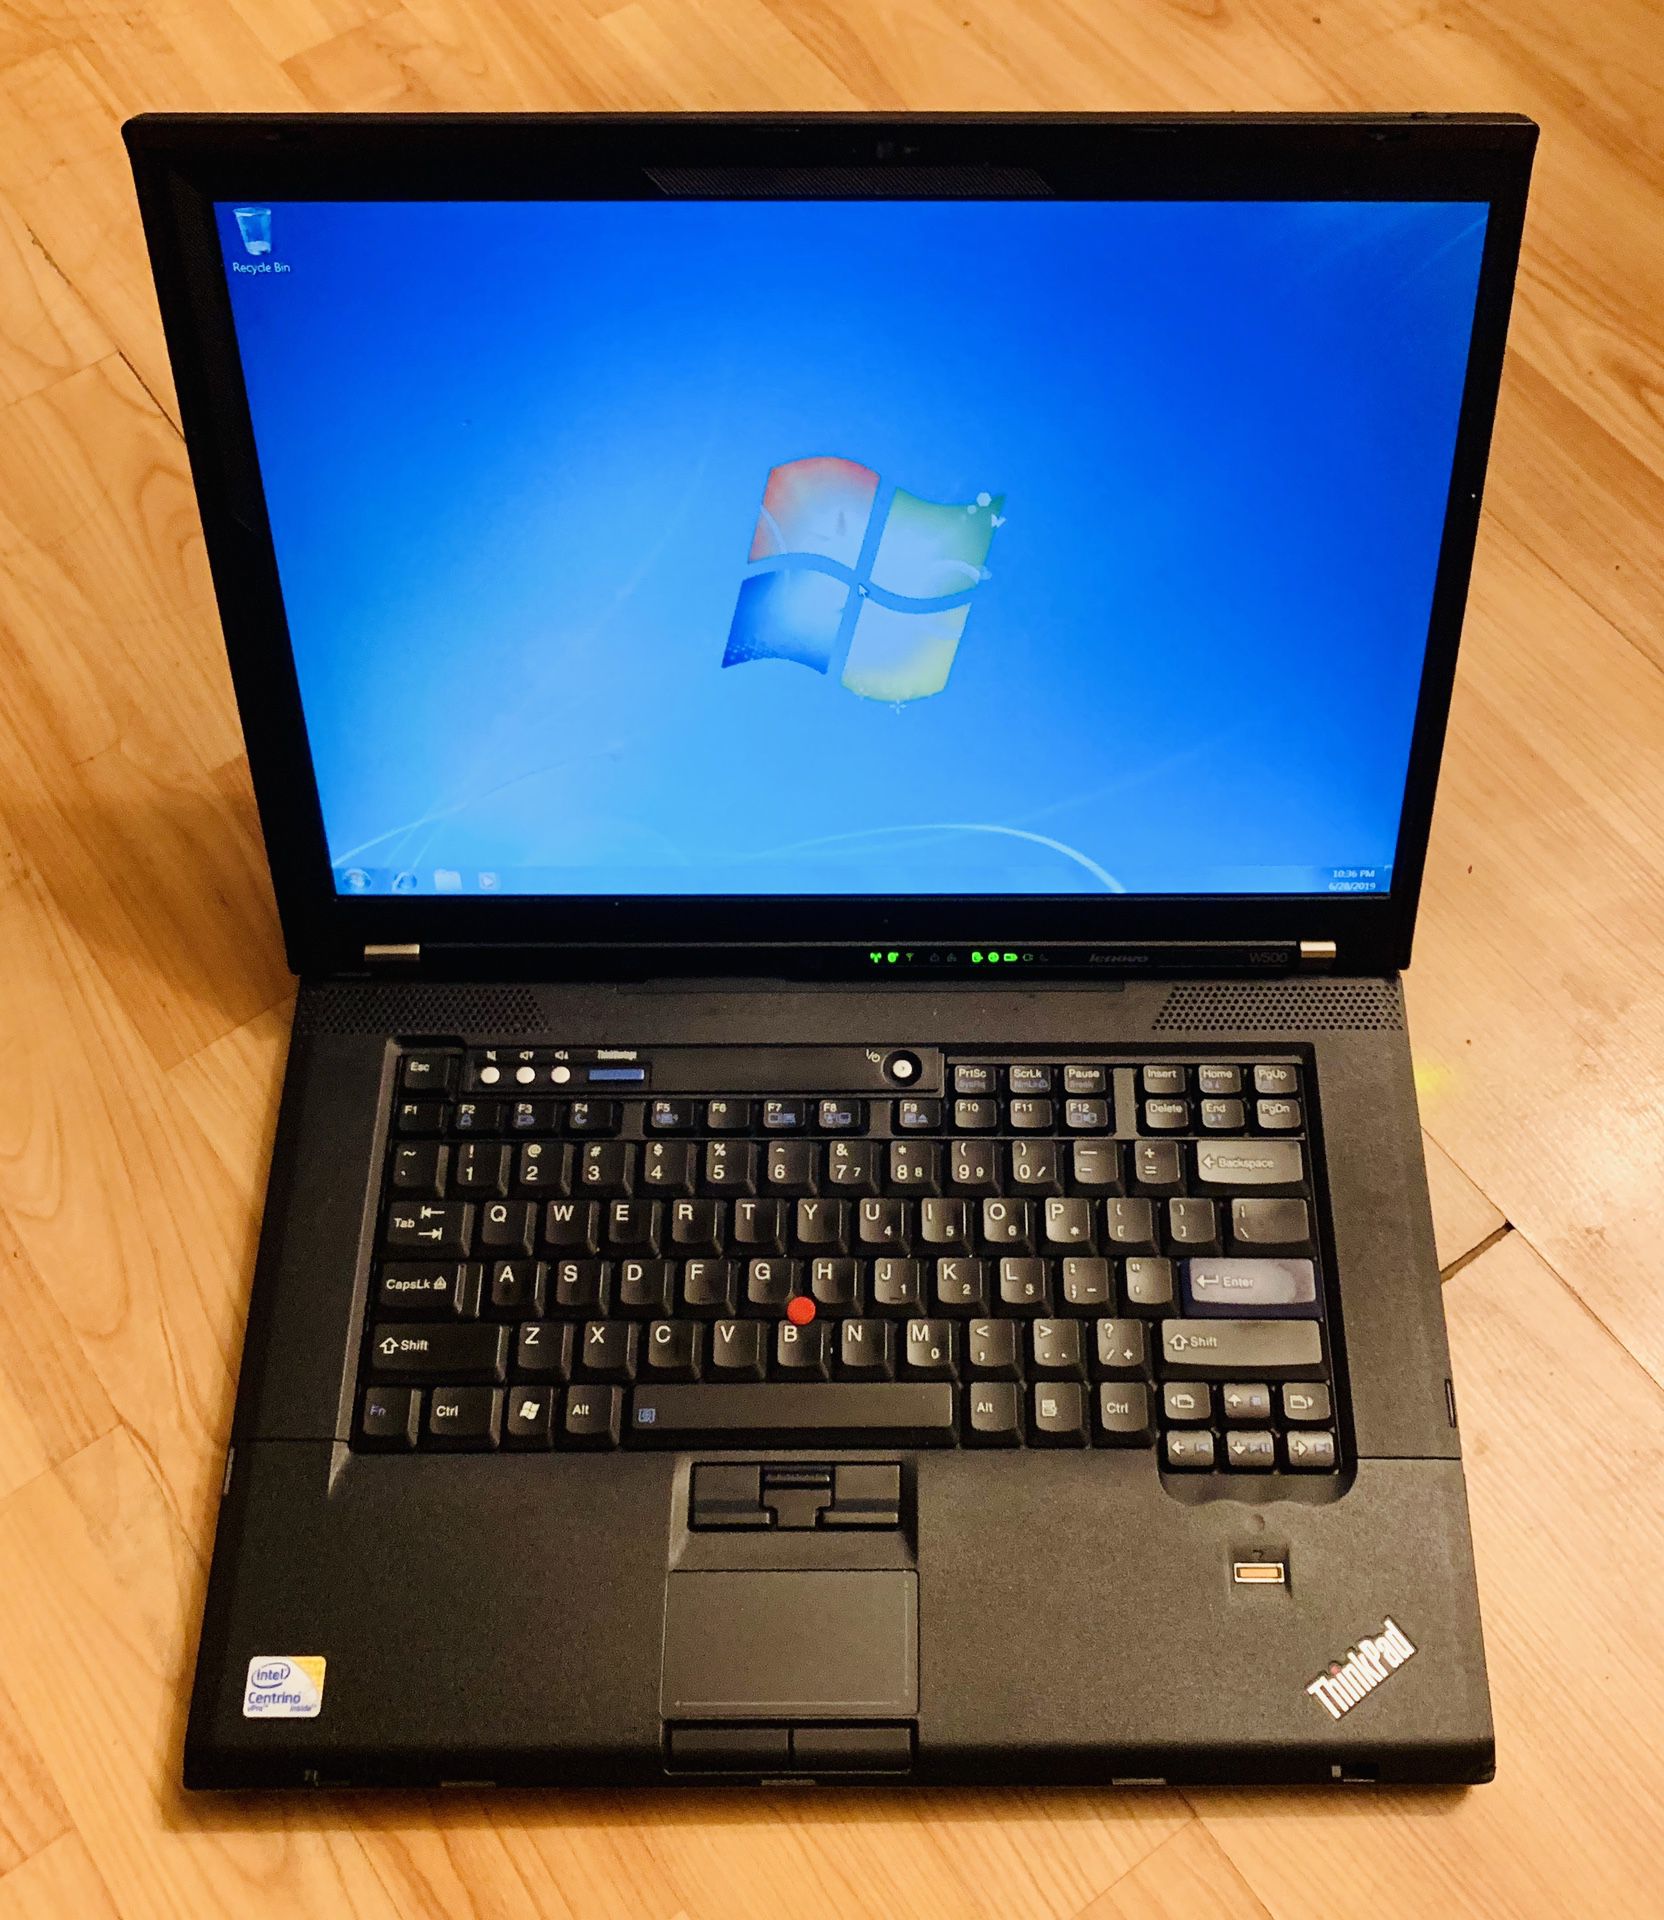 Lenovo Laptop | 15.4” Screen | Win 7 Ultimate | w500 | Microsoft Office | IBM Thinkpad | 120GB SSD | 4GB Ram